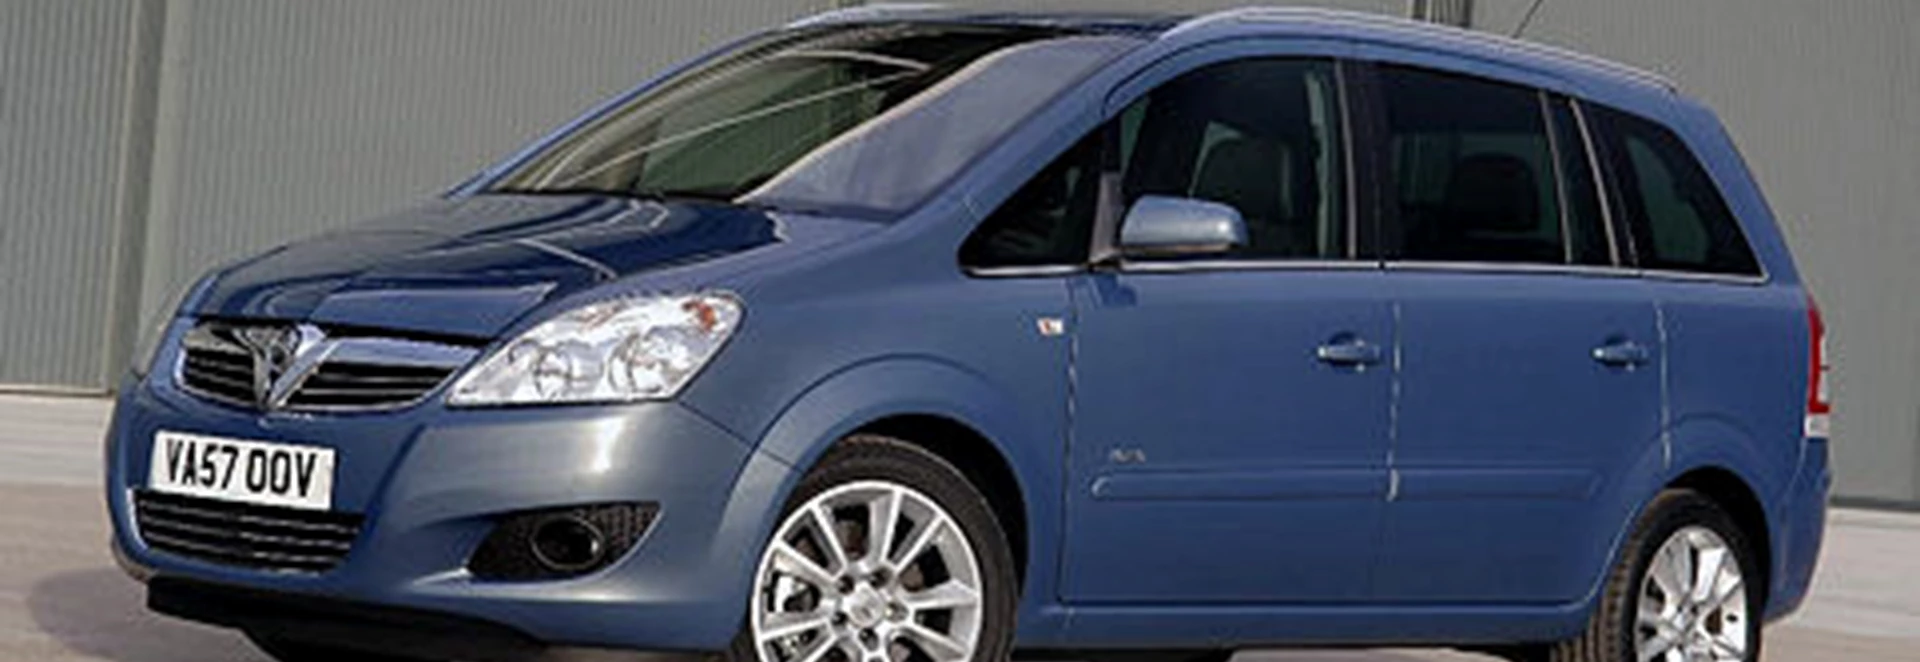 Vauxhall Zafira 1.9 CDTi Design (2008) 